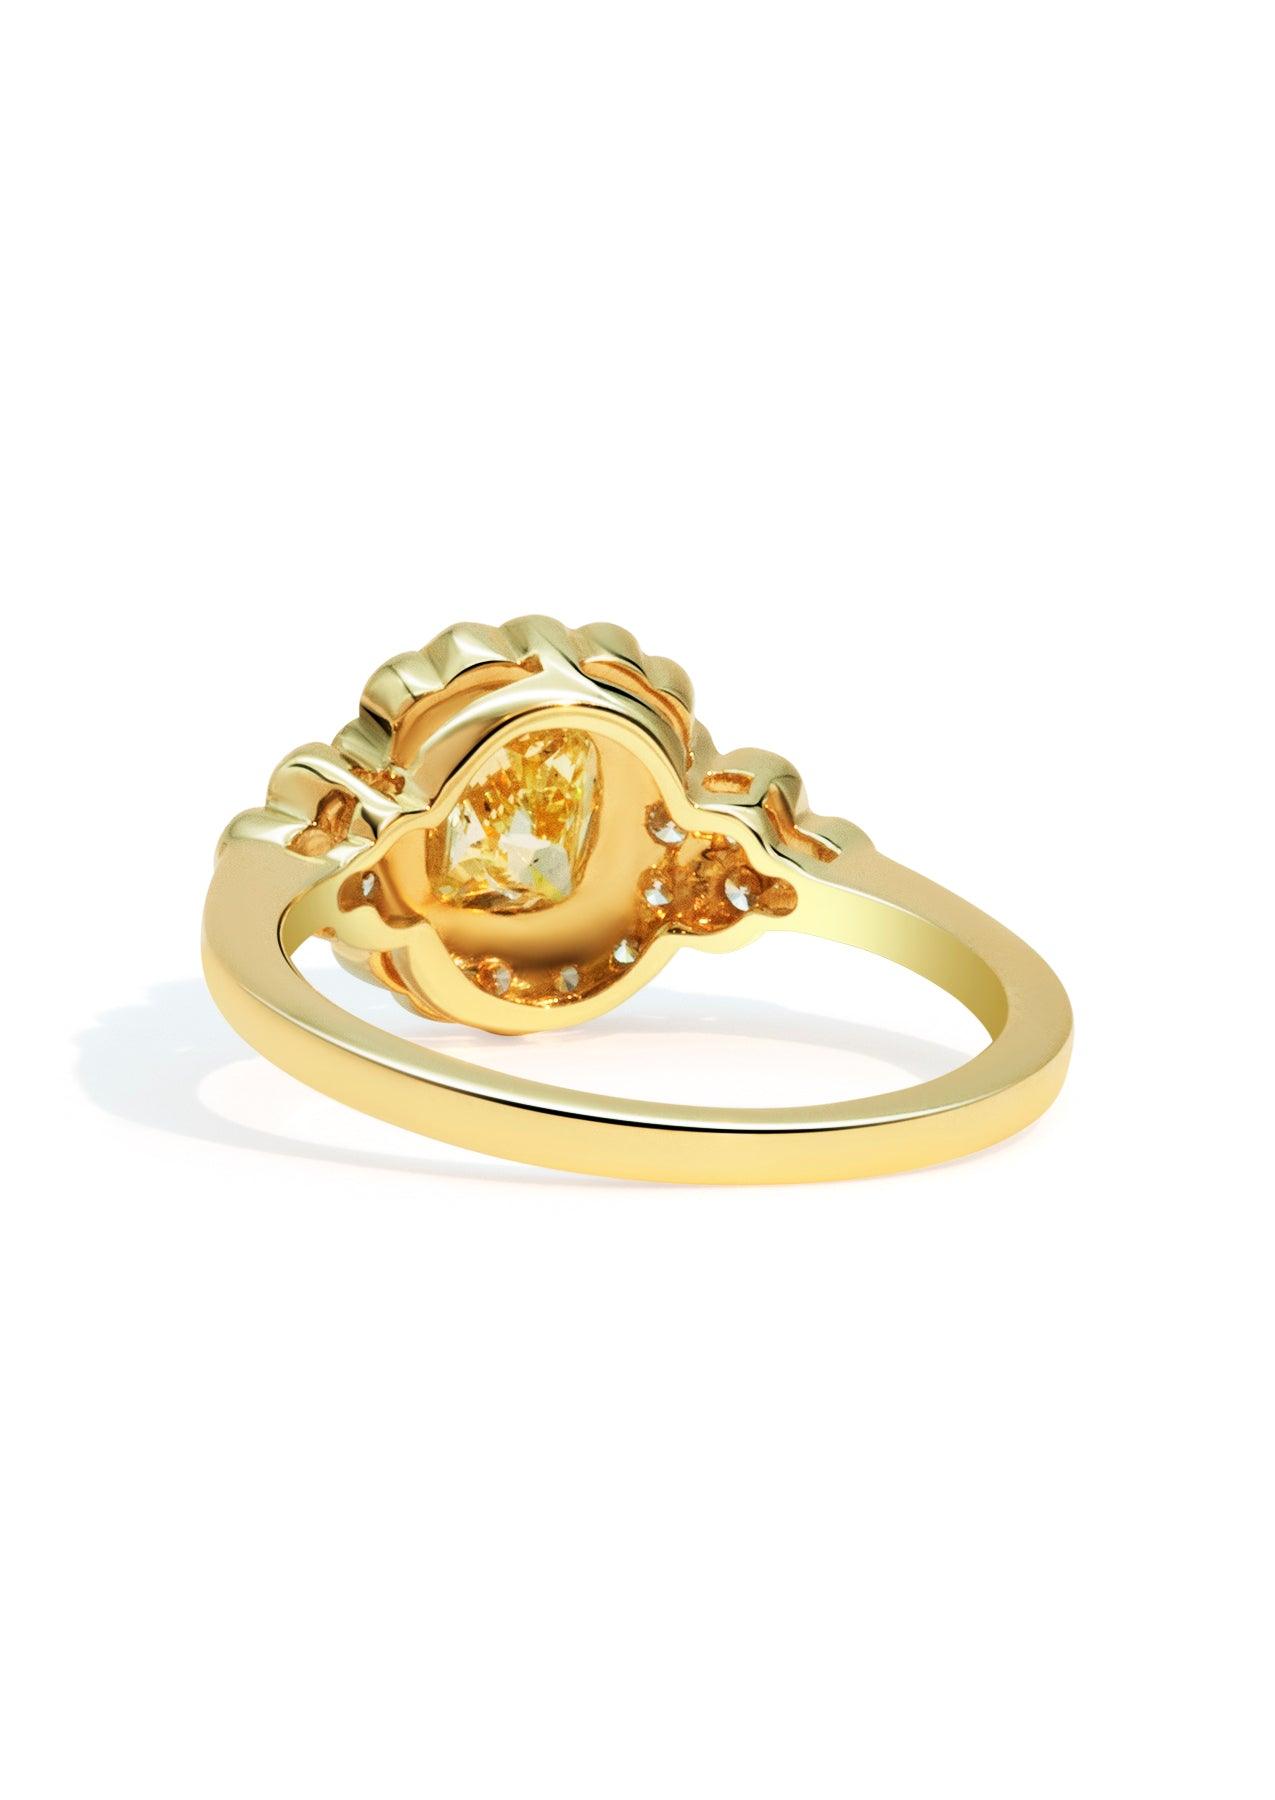 The Cosima 1.01ct Yellow Diamond Ring